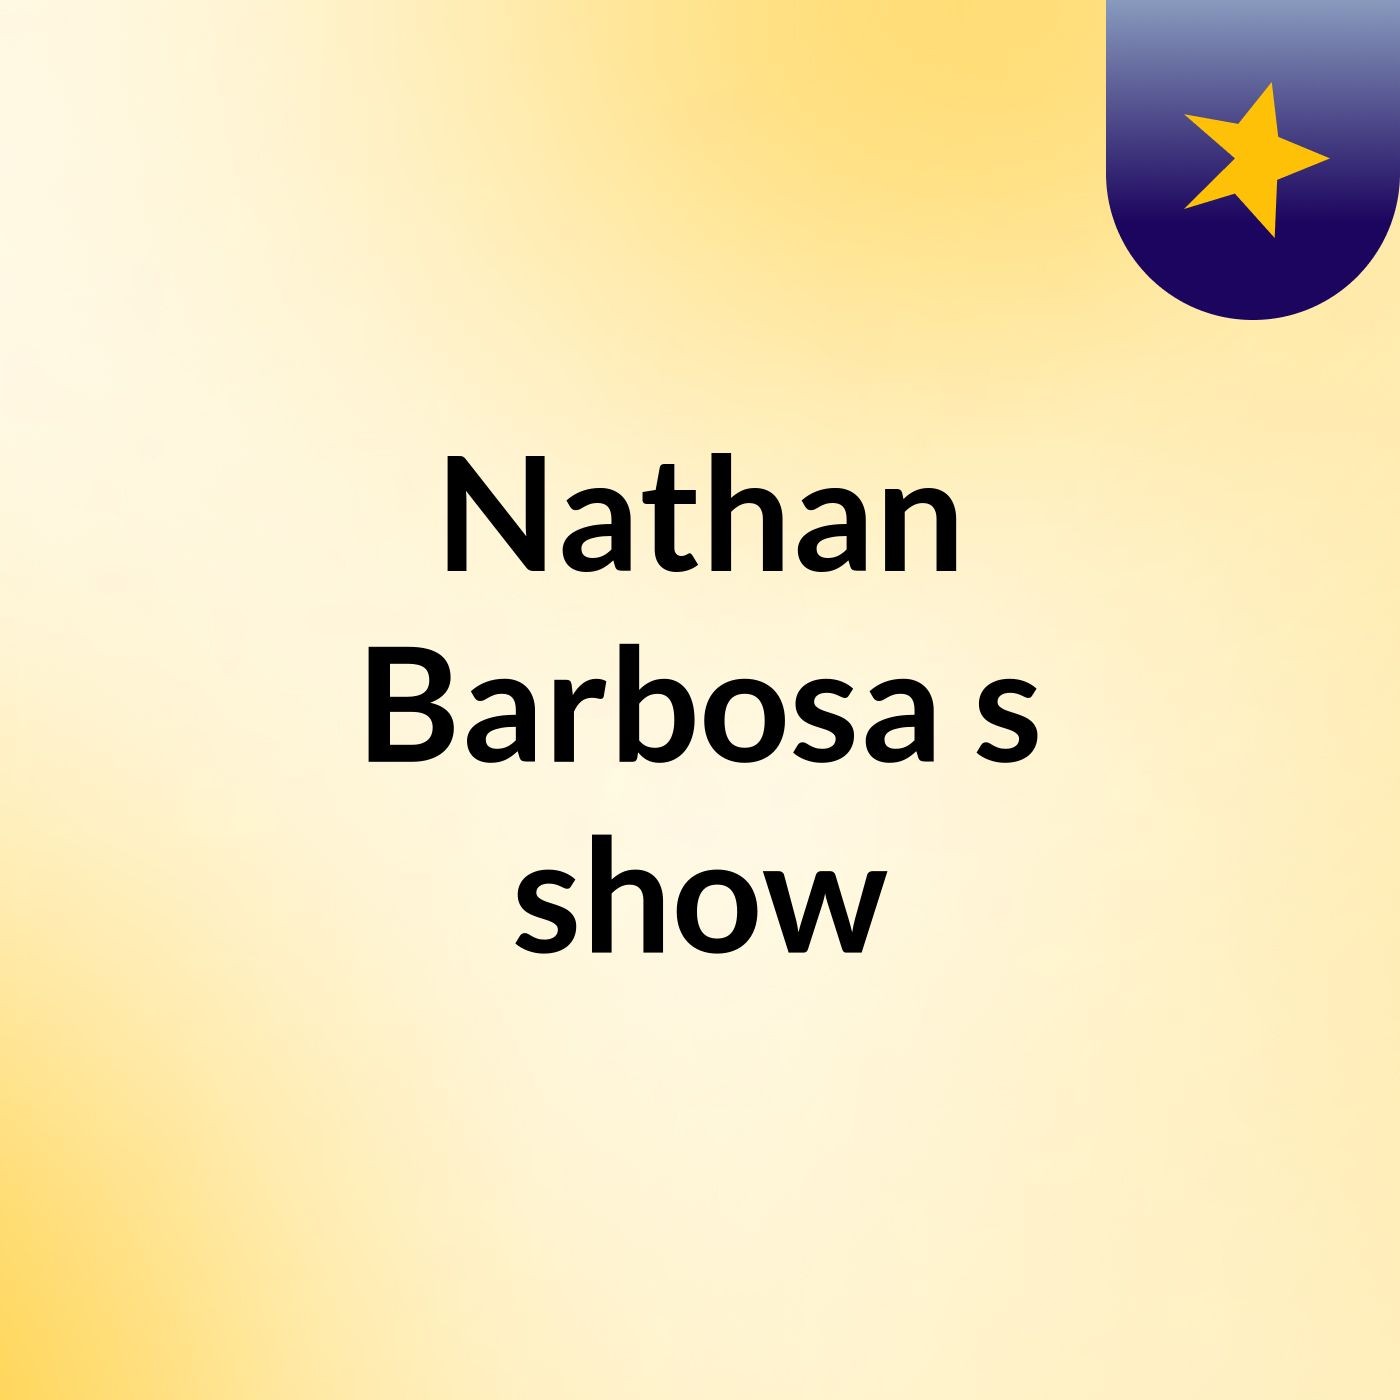 Nathan Barbosa's show